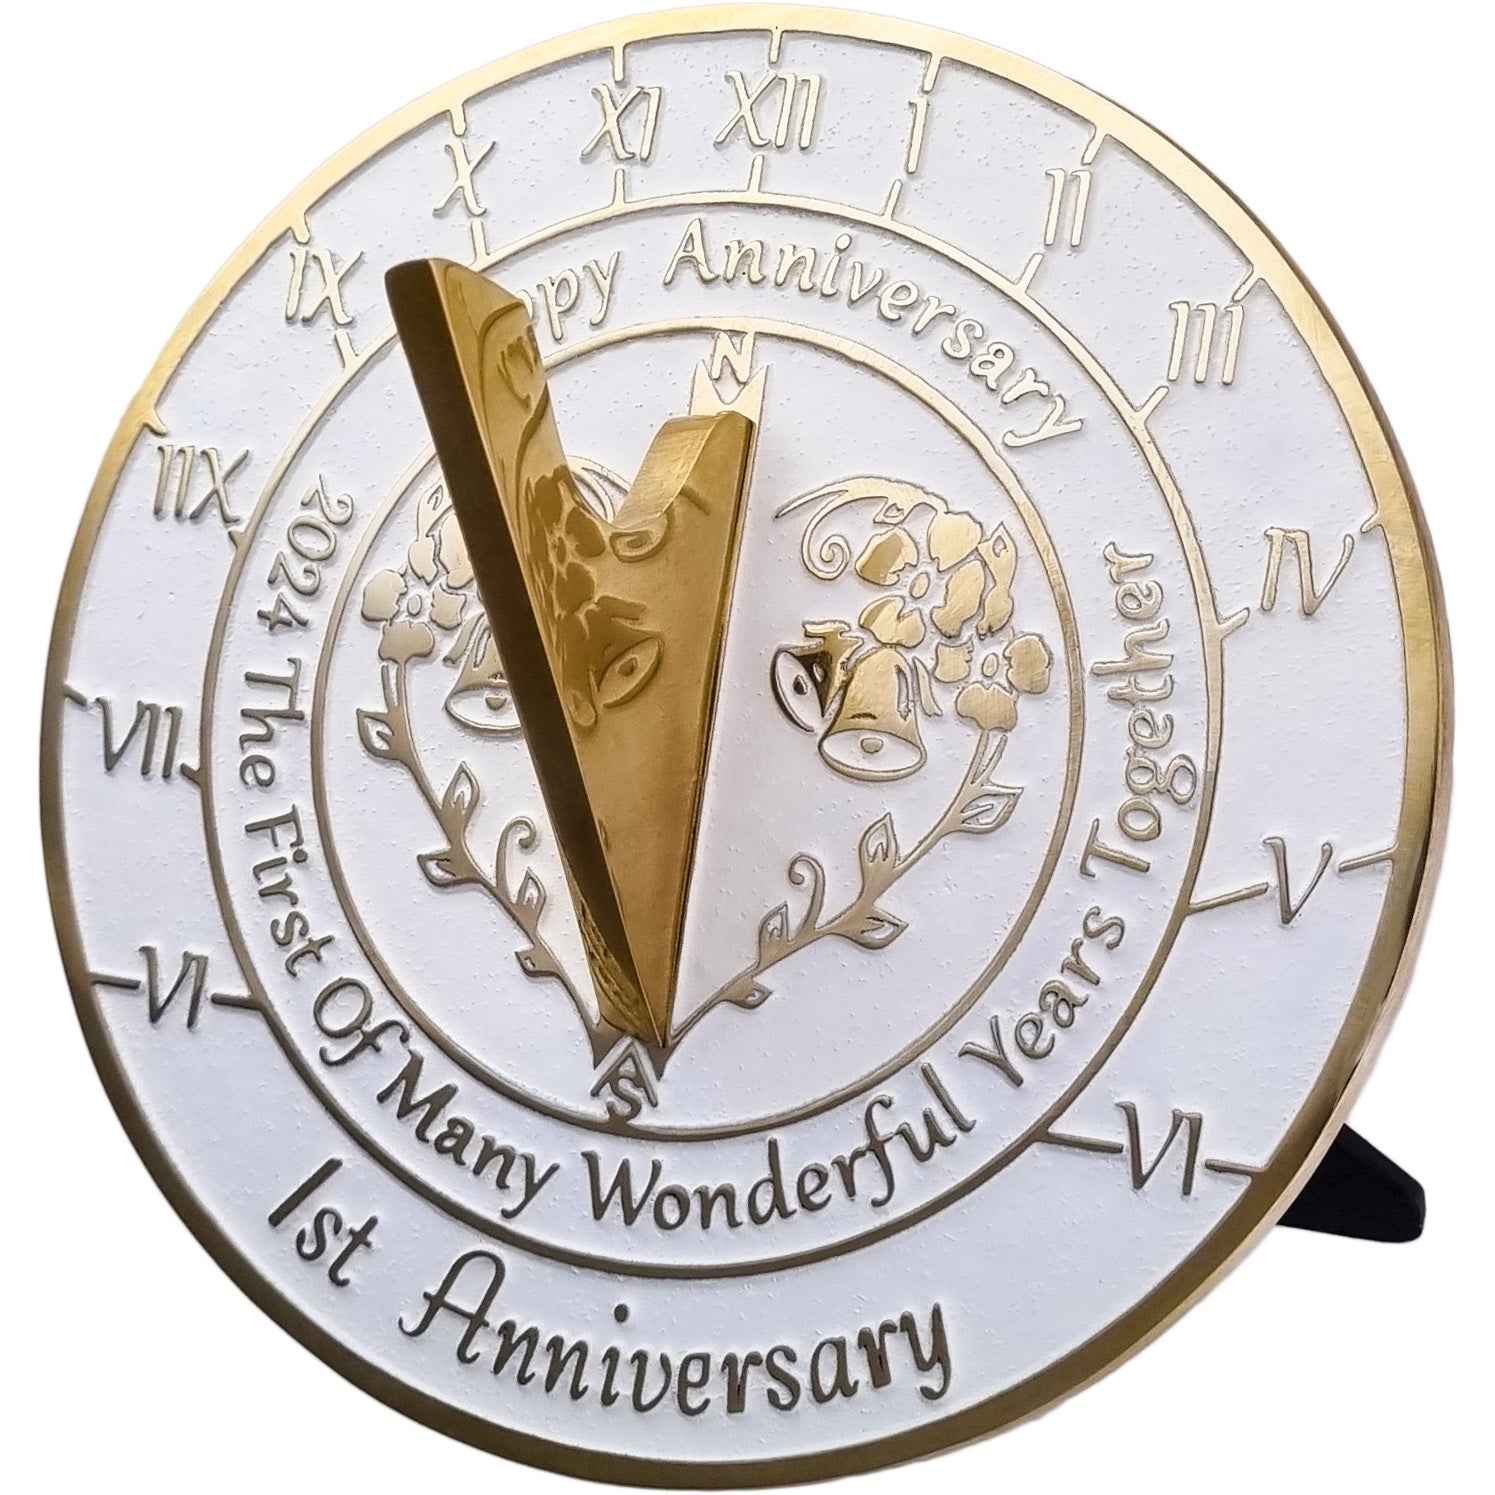 1st Wedding Anniversary Sundial Gift - The Metal Foundry